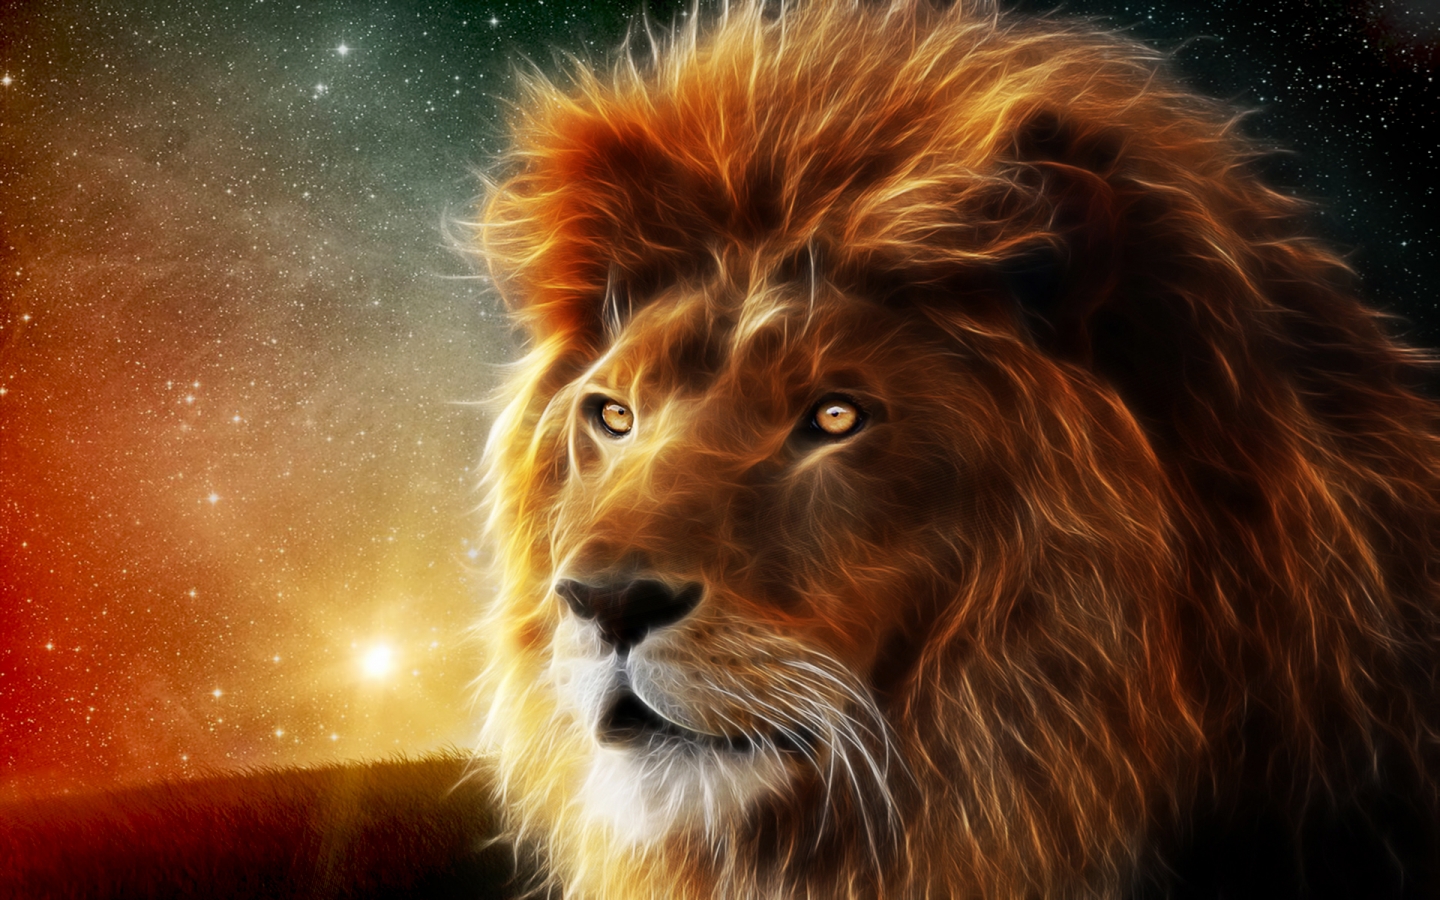 Lion Portrait for 1440 x 900 widescreen resolution